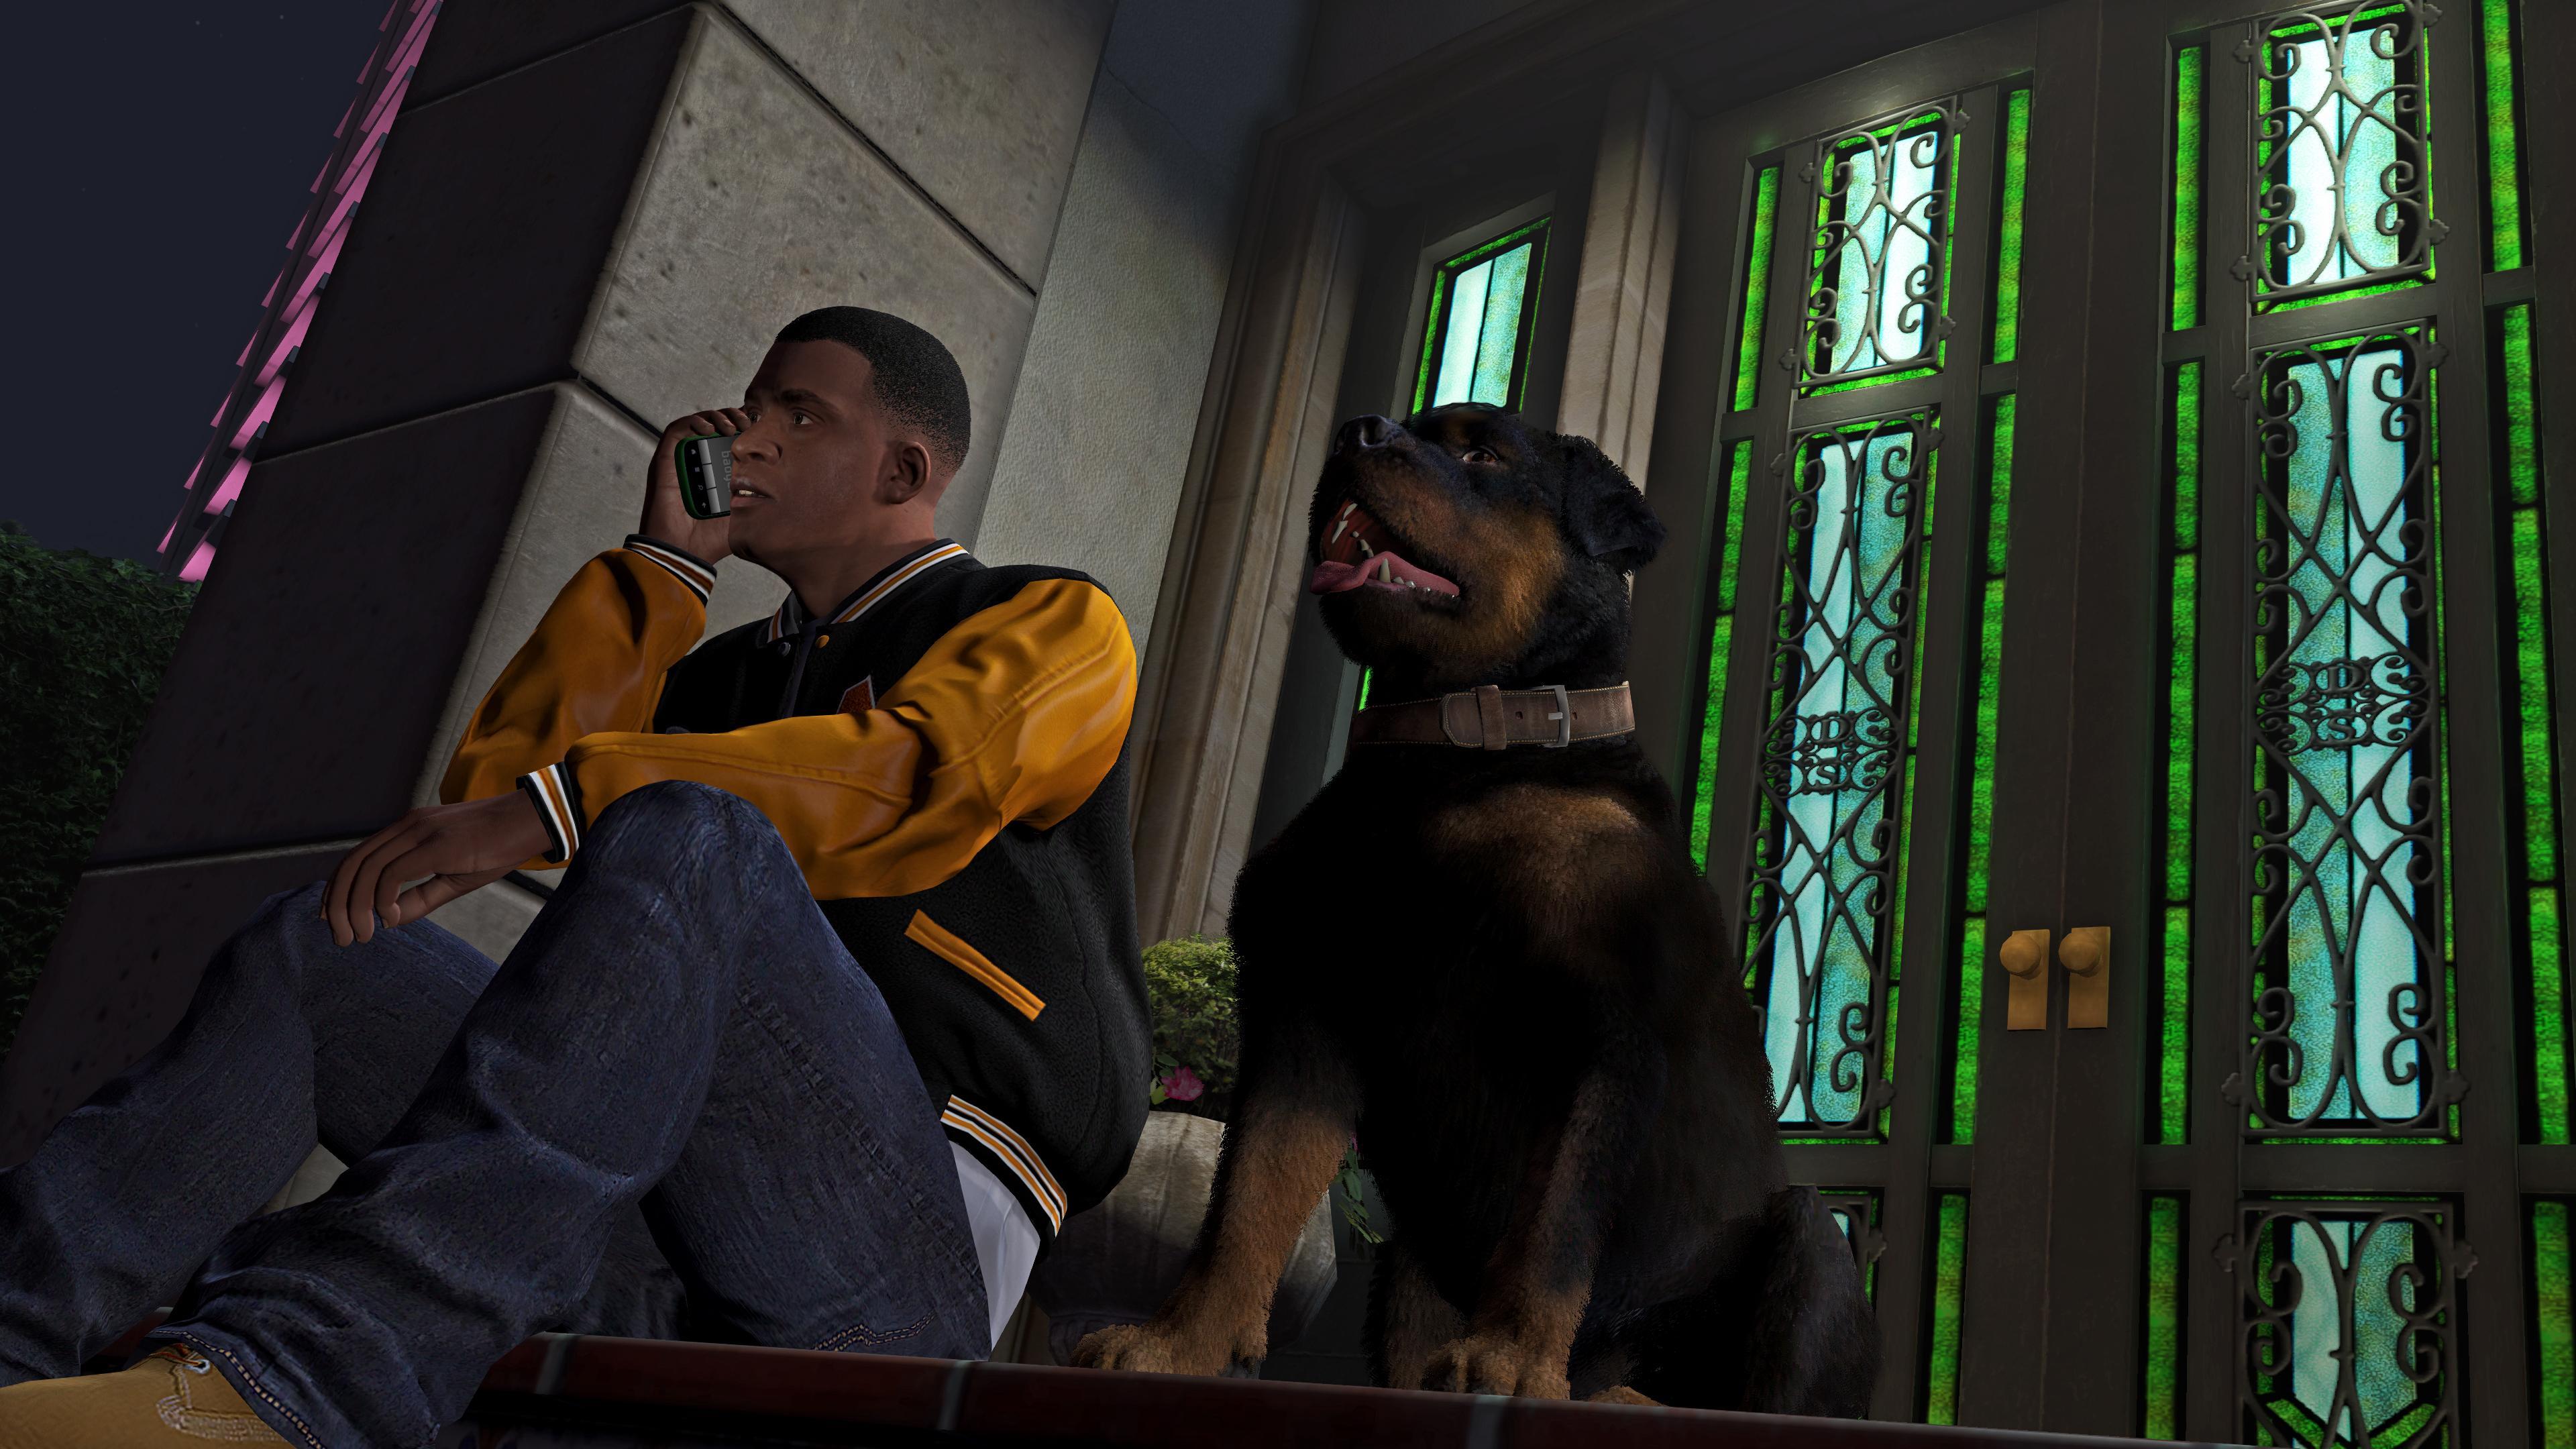 Grand Theft Auto V 4k Ultra HD Wallpaper. Background Image